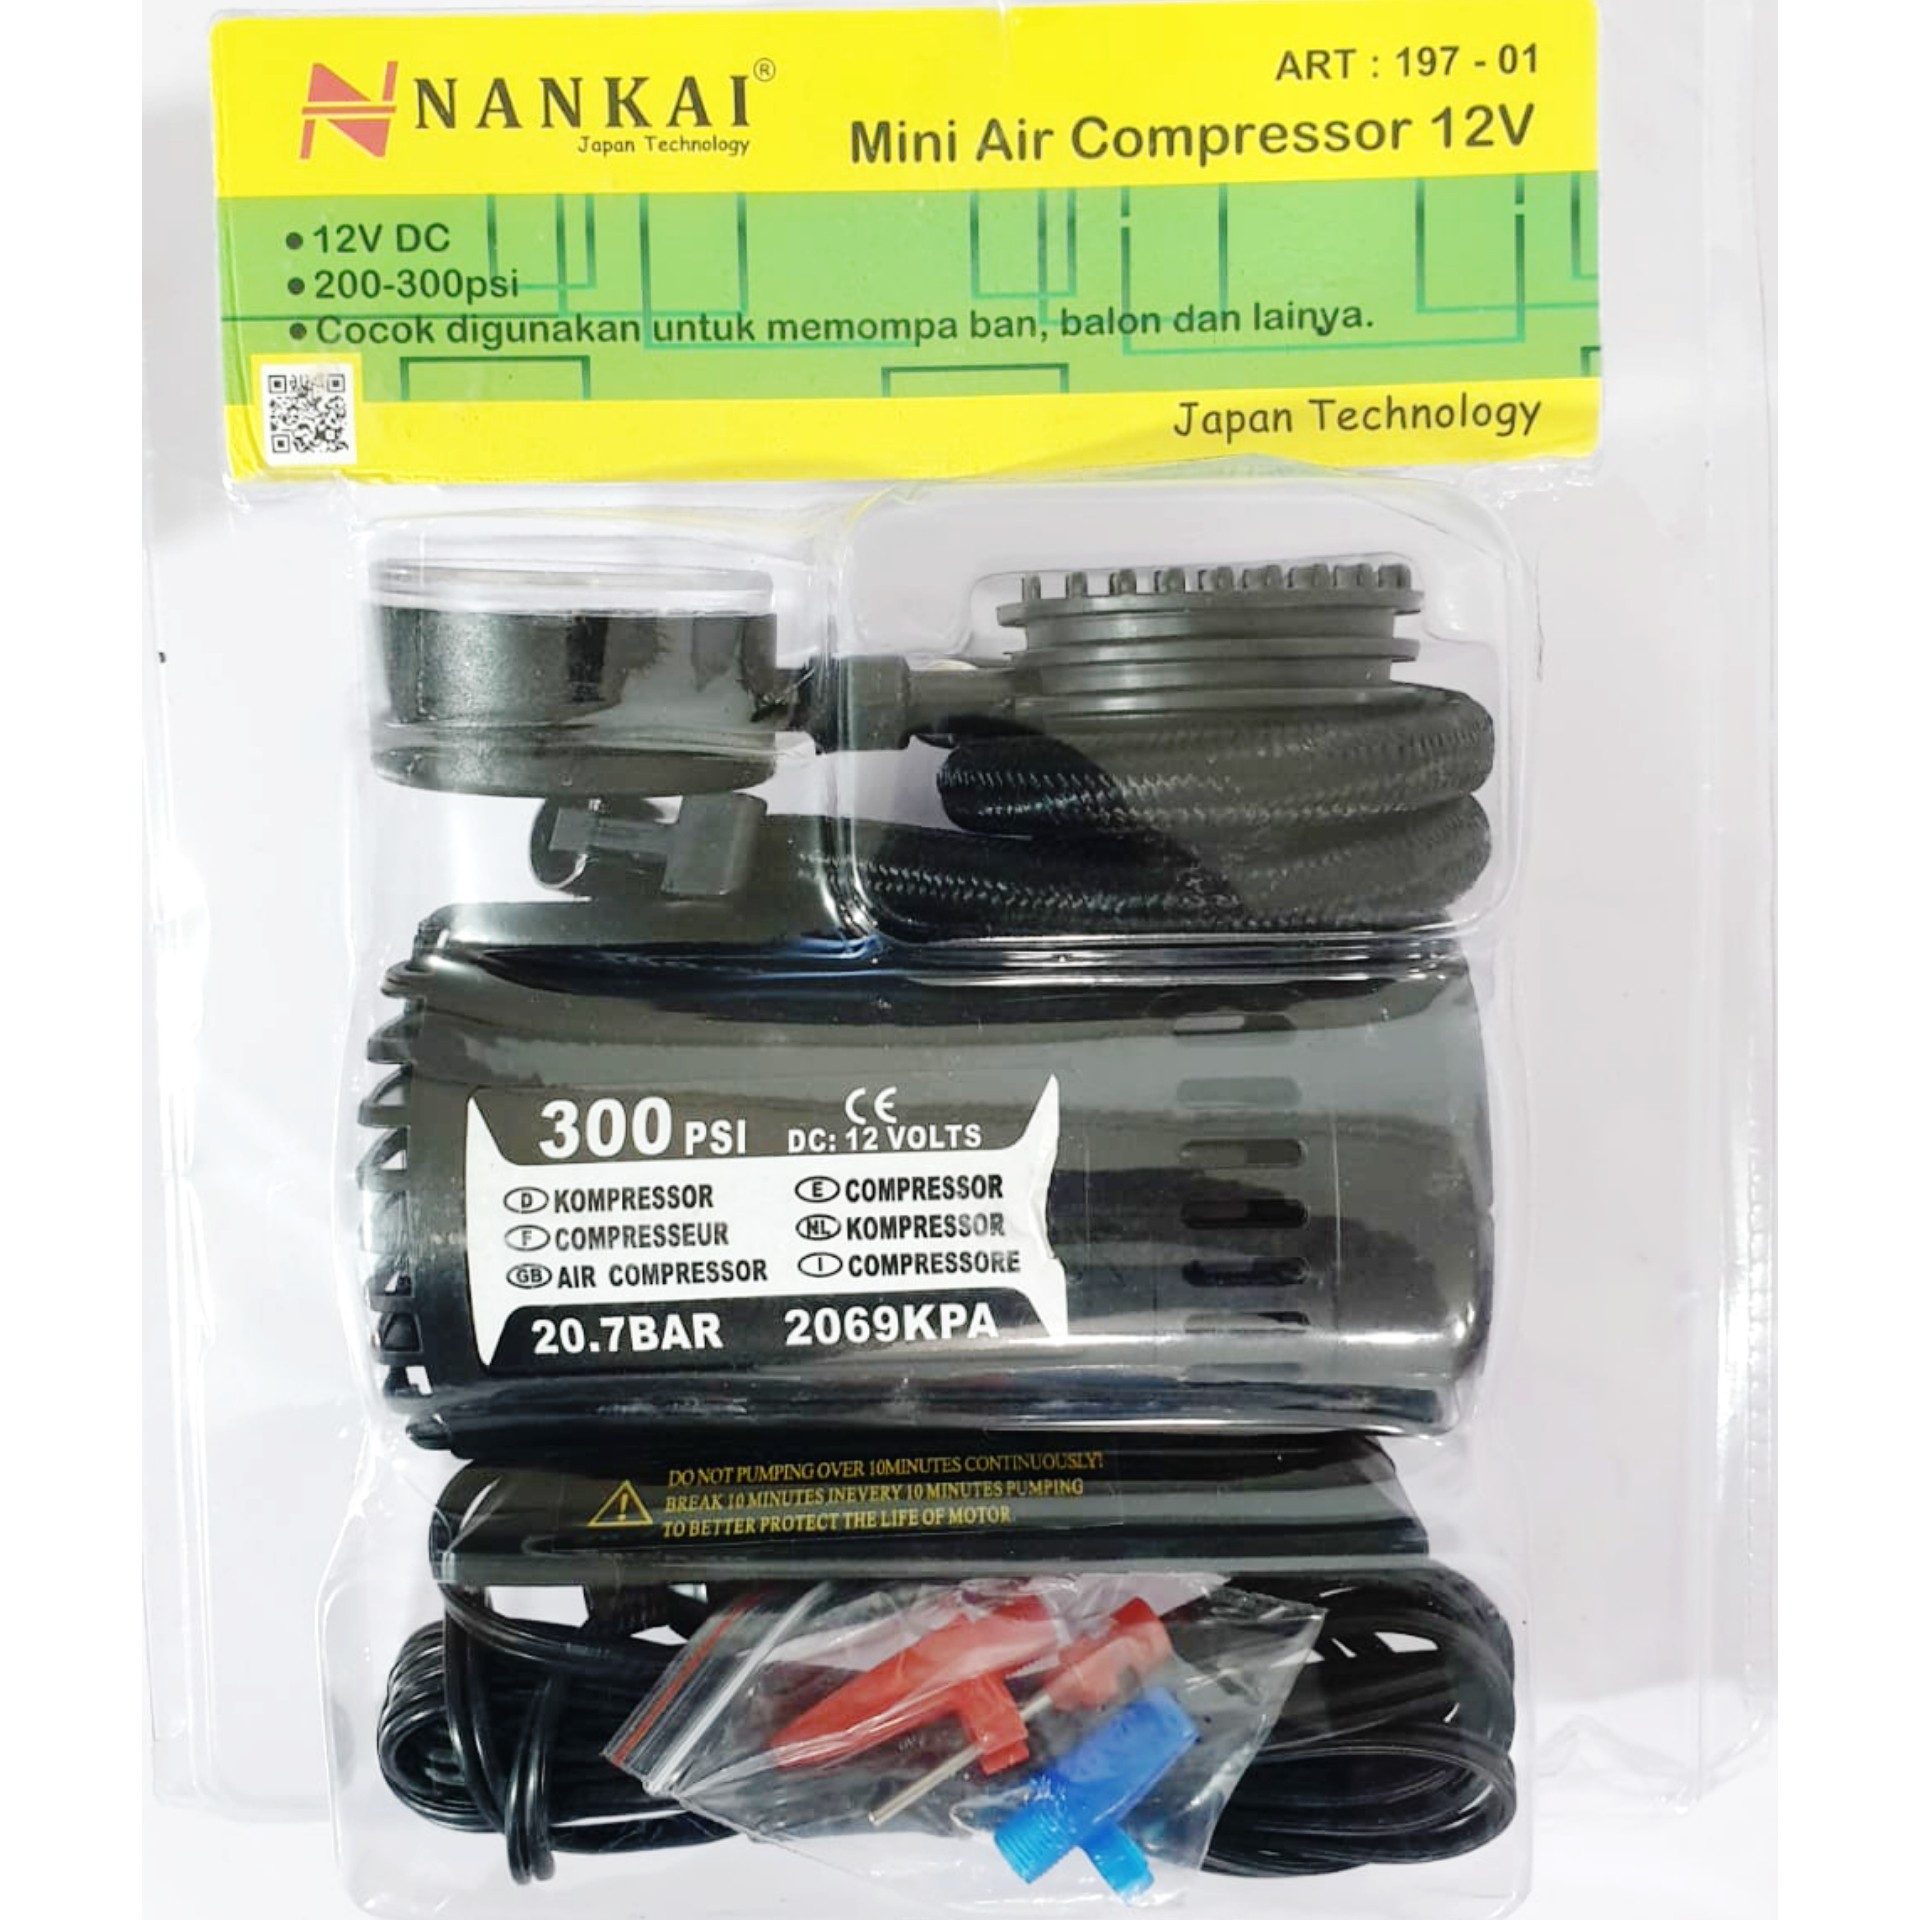 Mini Air Compressor Nankai ART-197-01 3